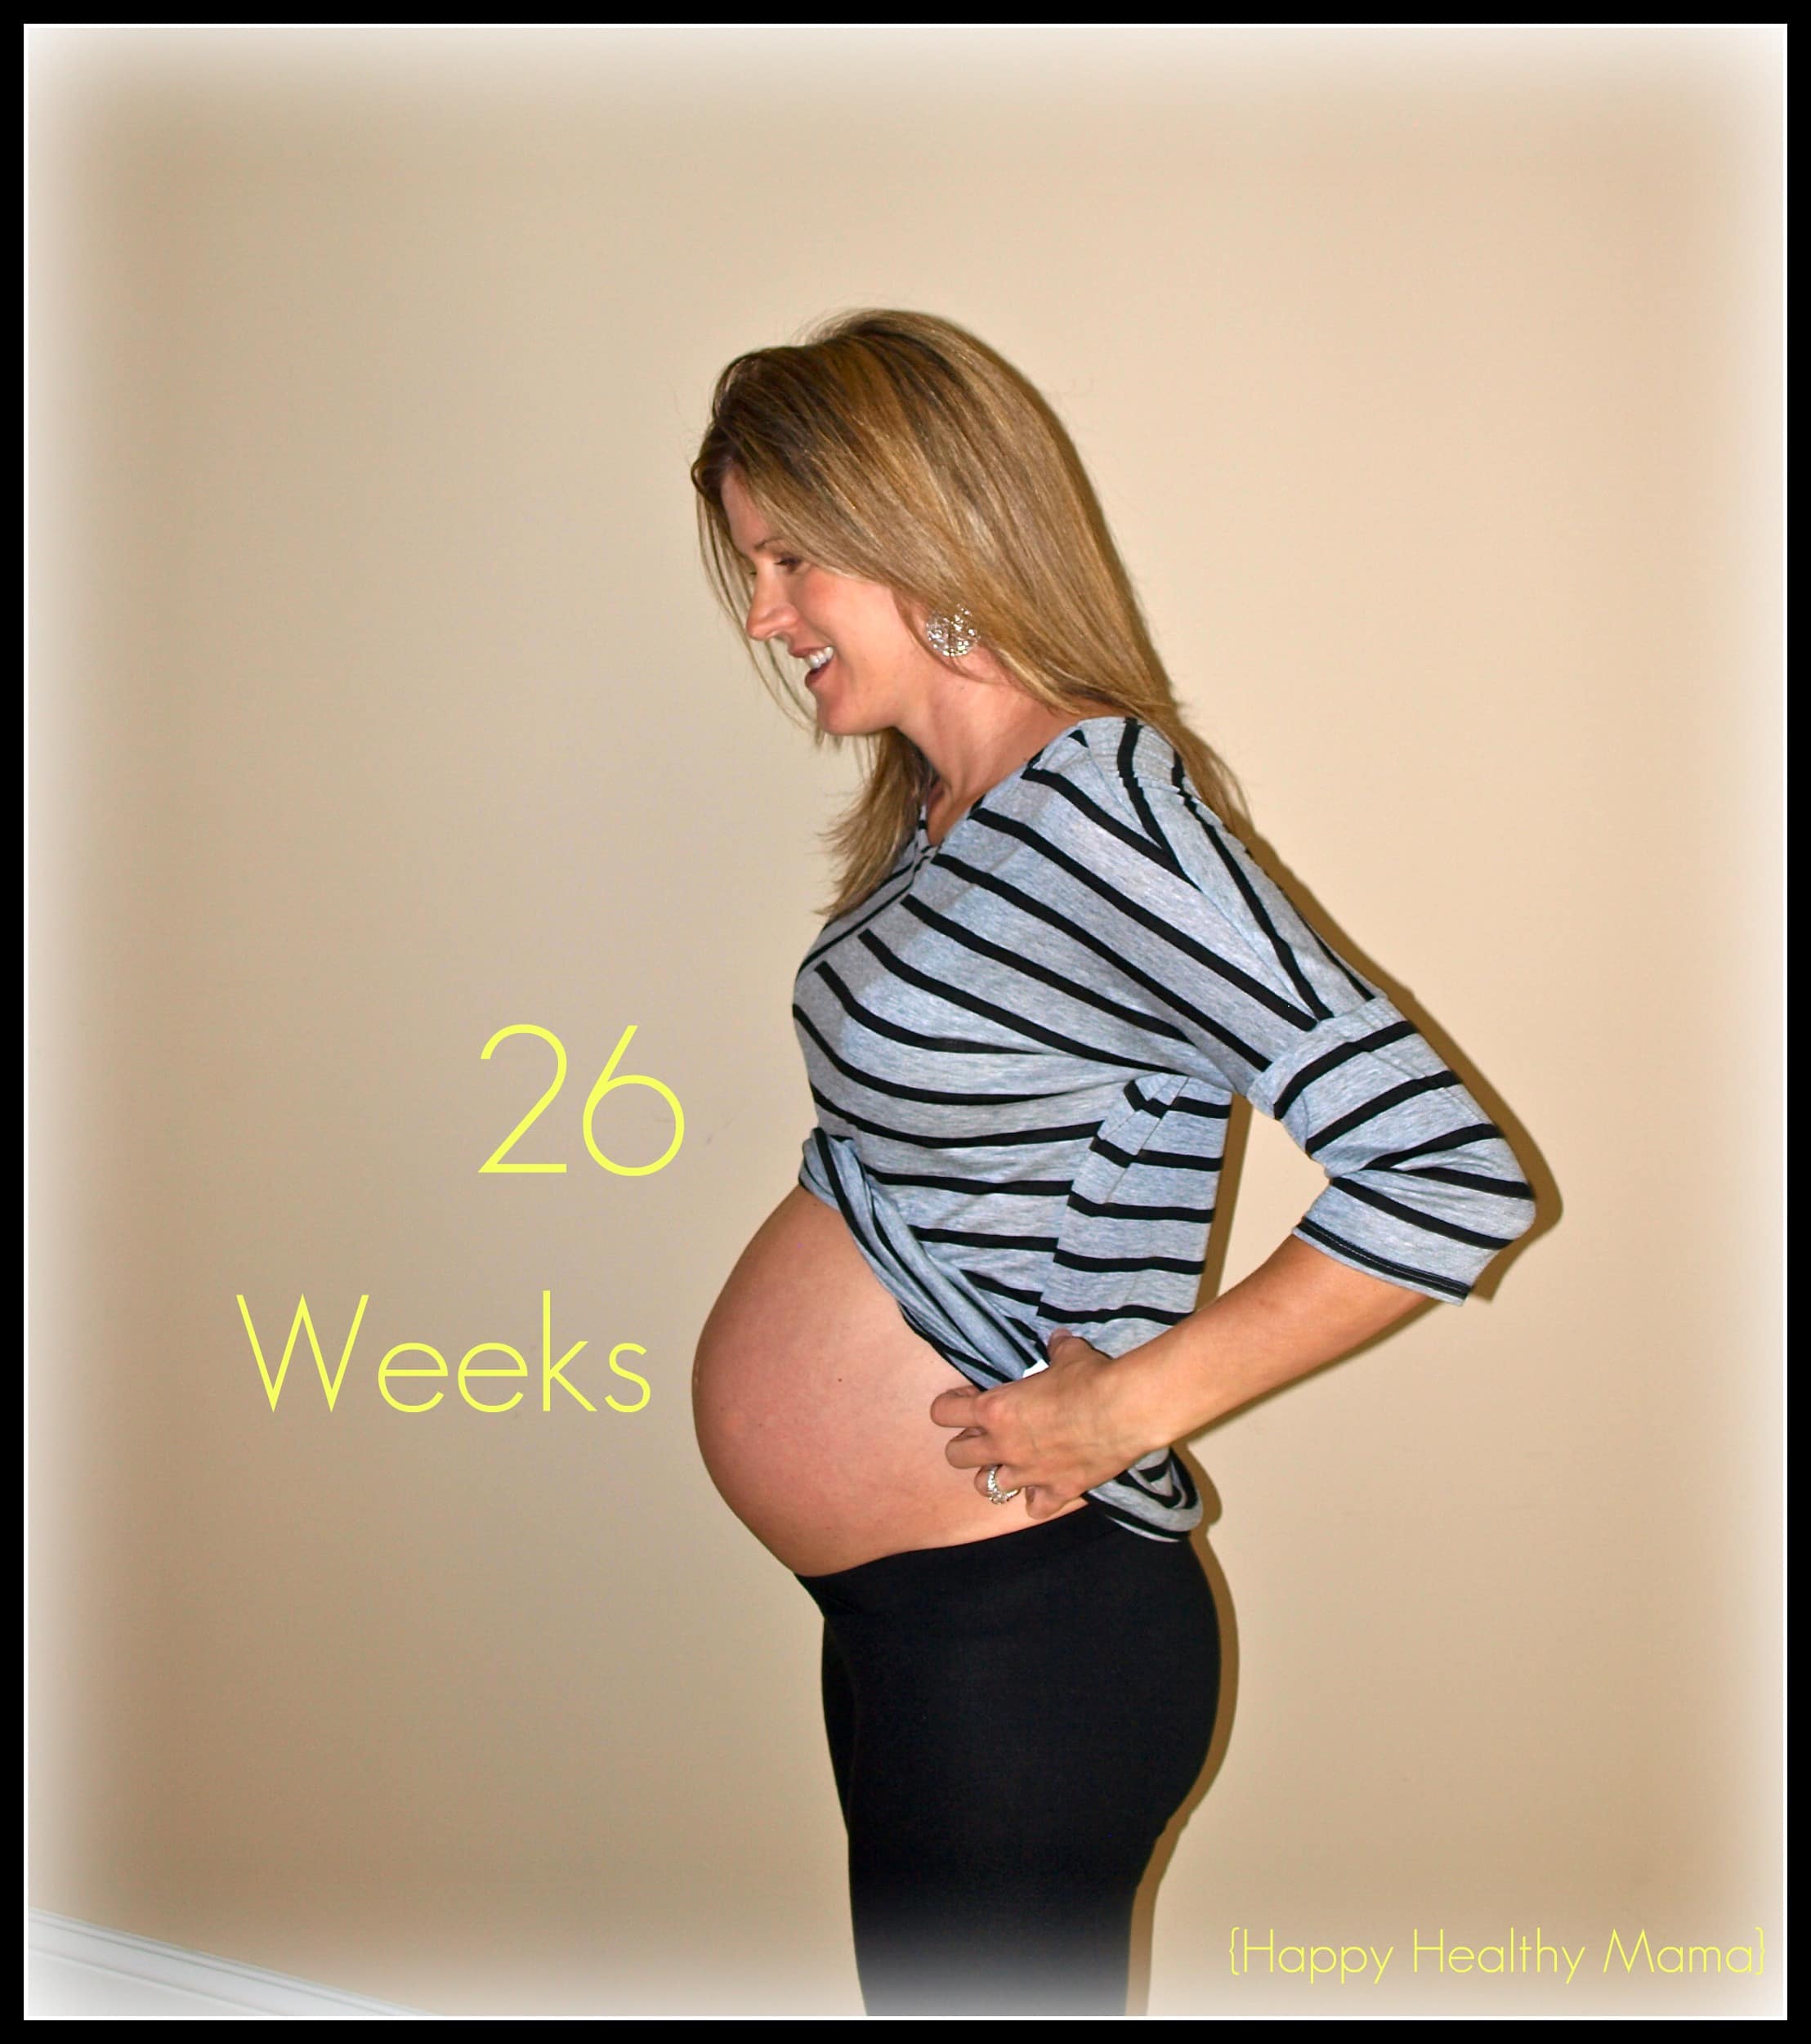 Baby Development At 26 Weeks Of Pregnancy